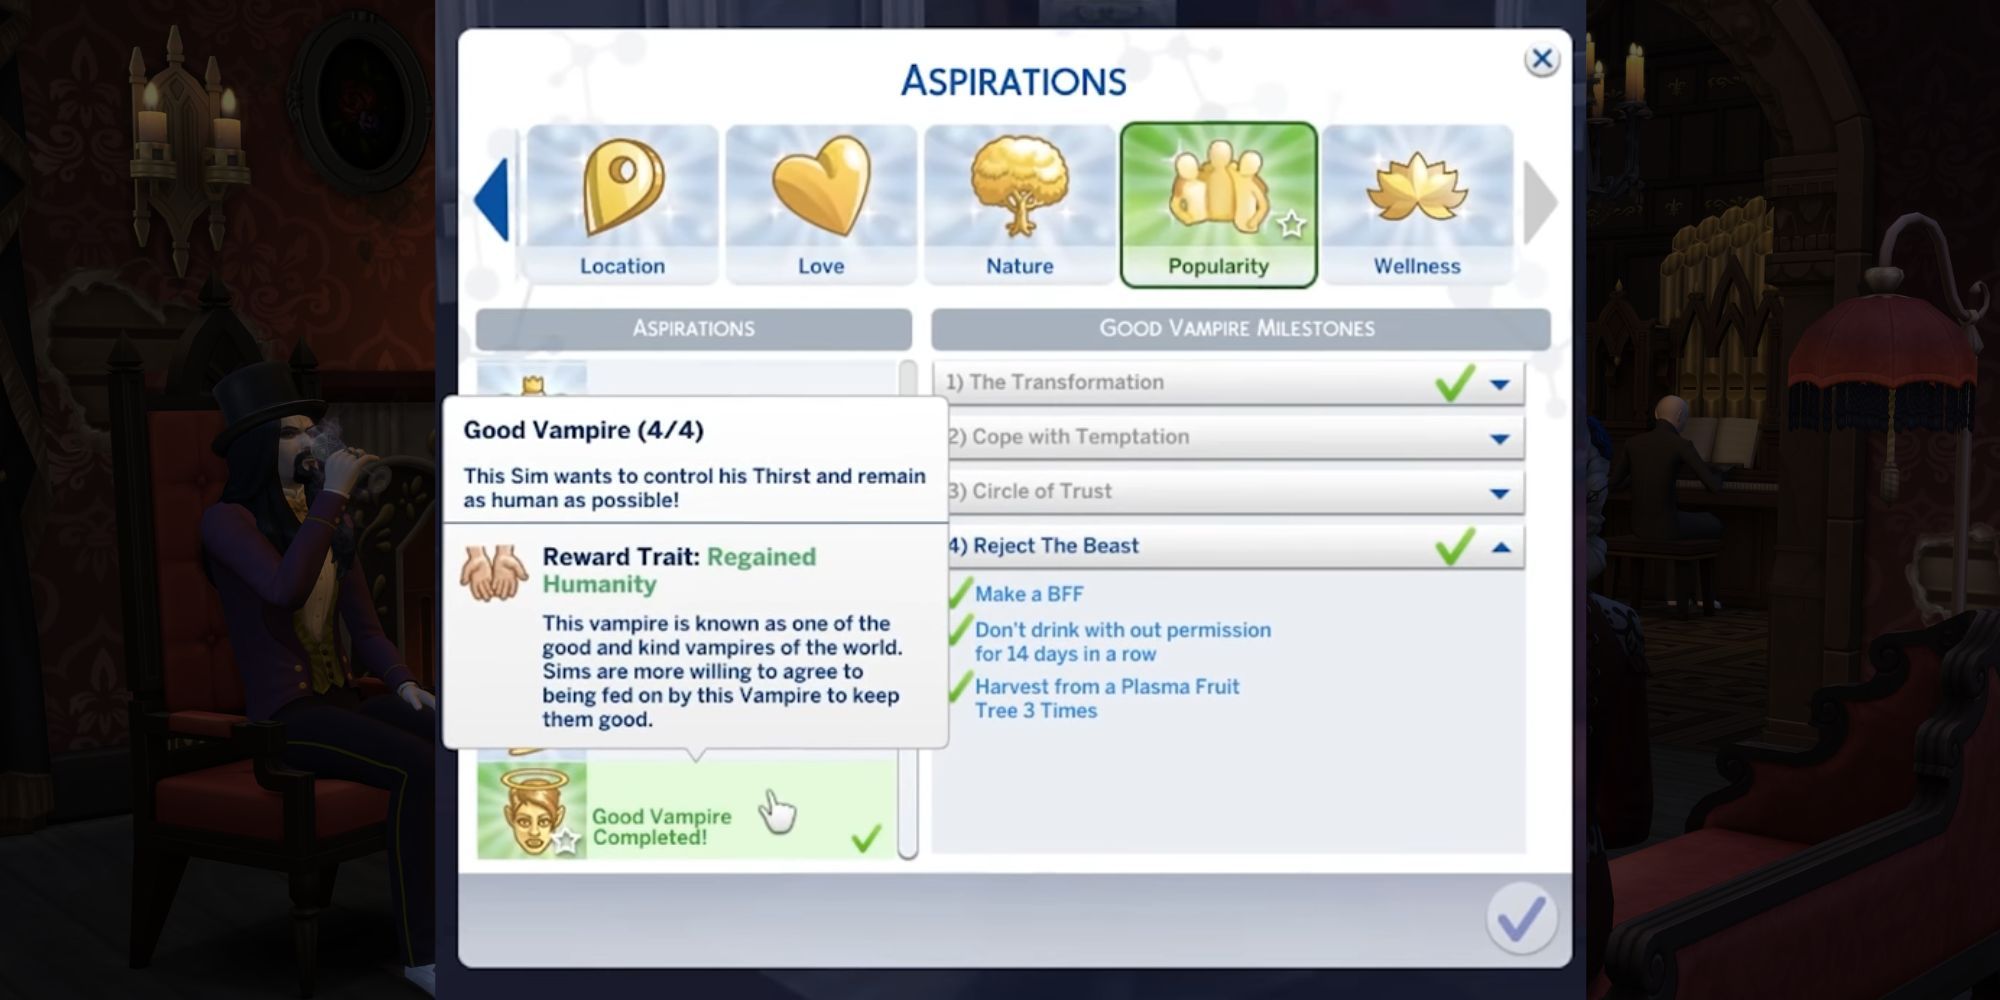 The Sims 4 Good Vampire Aspiration